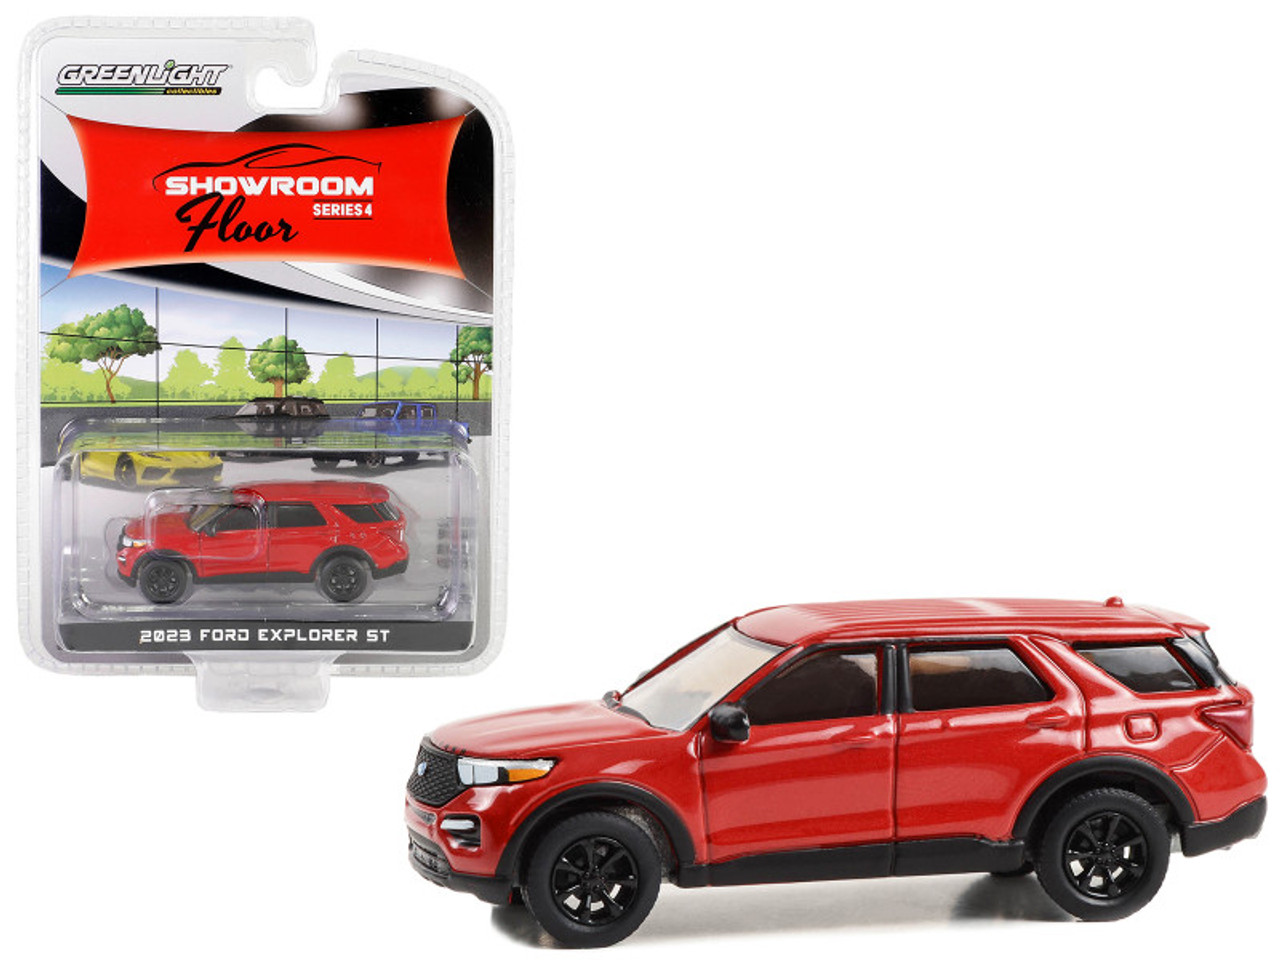 2023 Ford Explorer ST Rapid Red Metallic "Showroom Floor" Series 4 1/64 Diecast Model Car by Greenlight